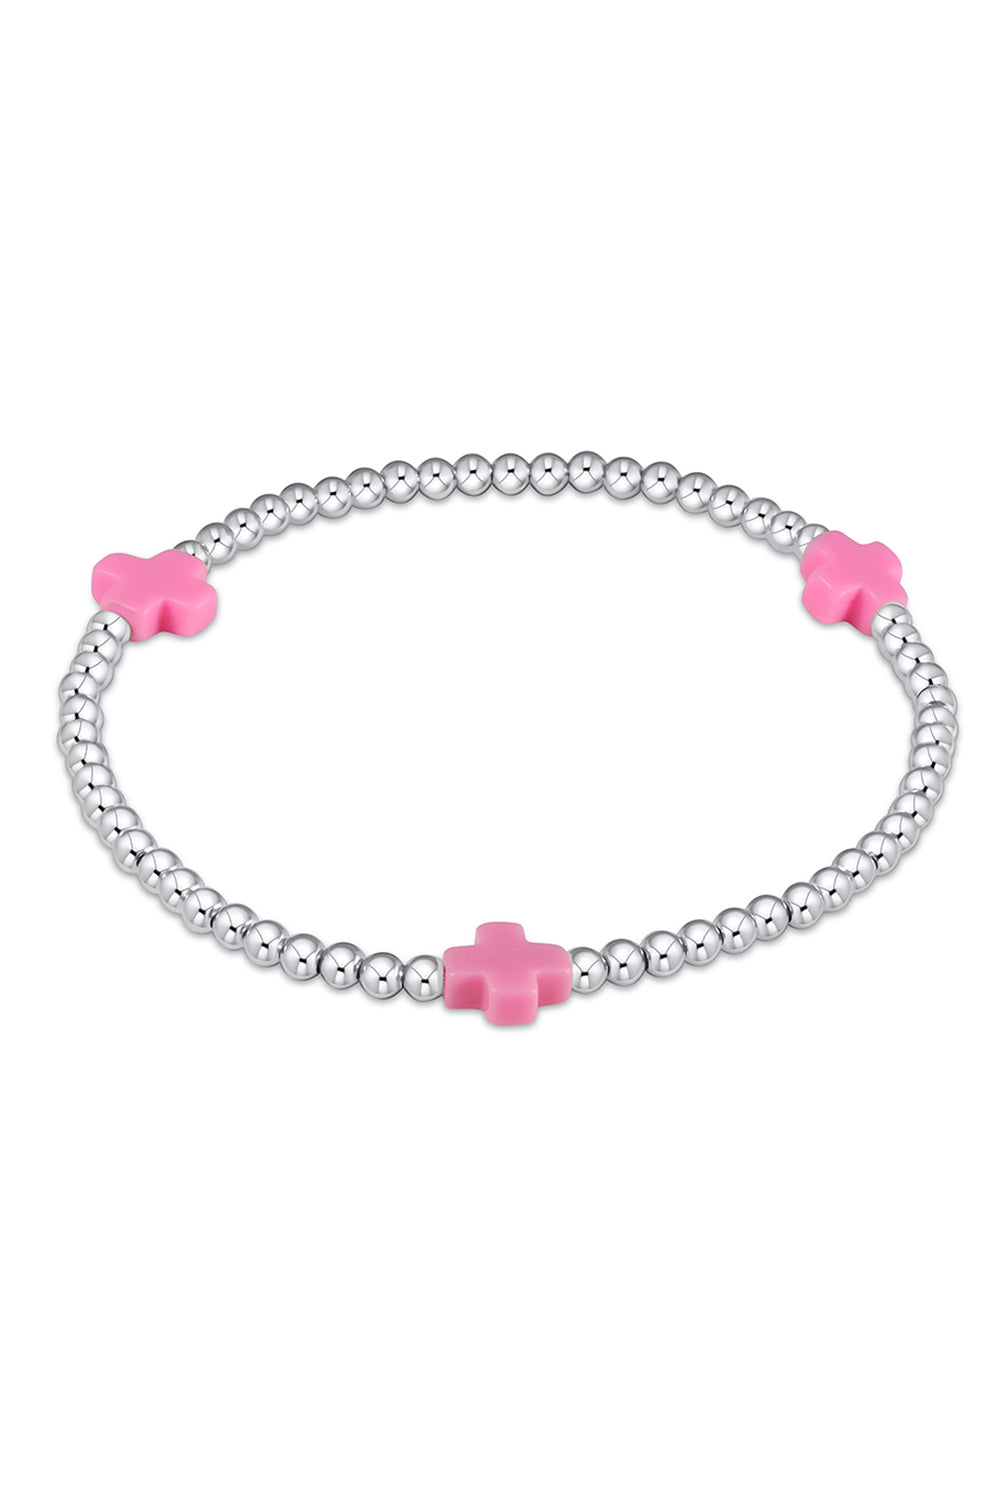 EN Sterling Signature Cross Pattern Bracelet 3mm - Bright Pink